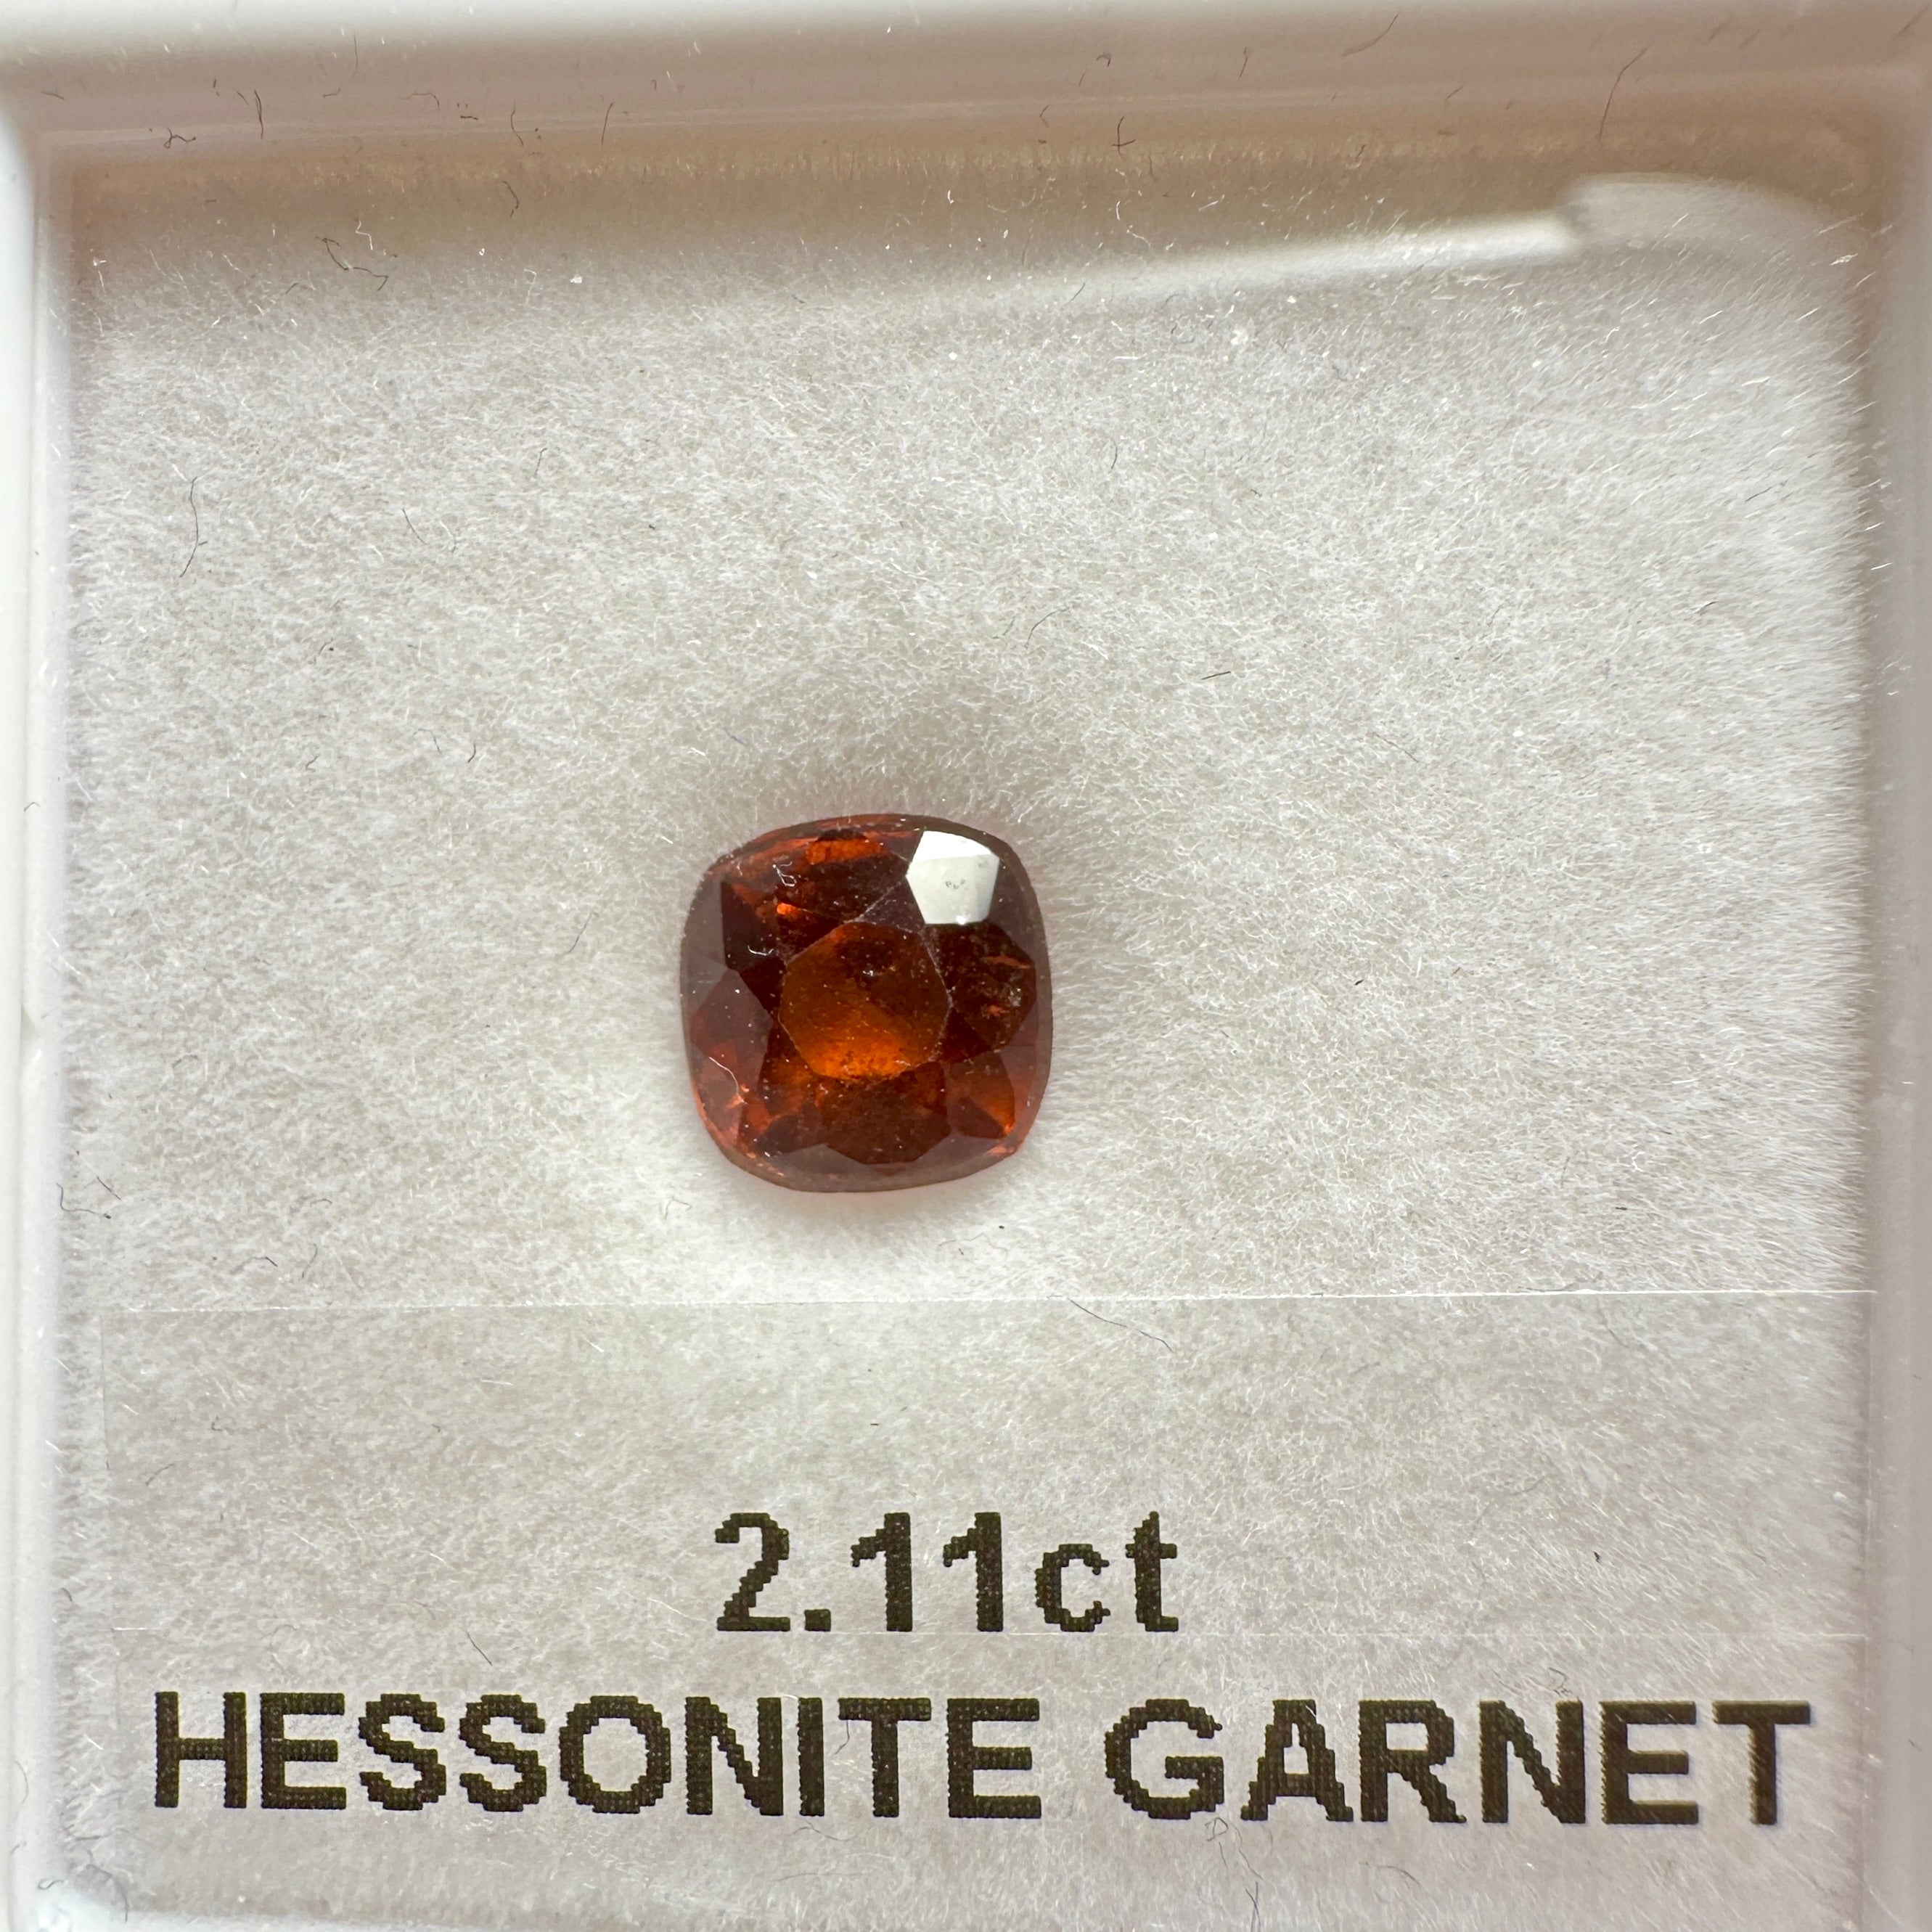 2.11ct Hessonite Garnet, Untreated Unheated, native cut